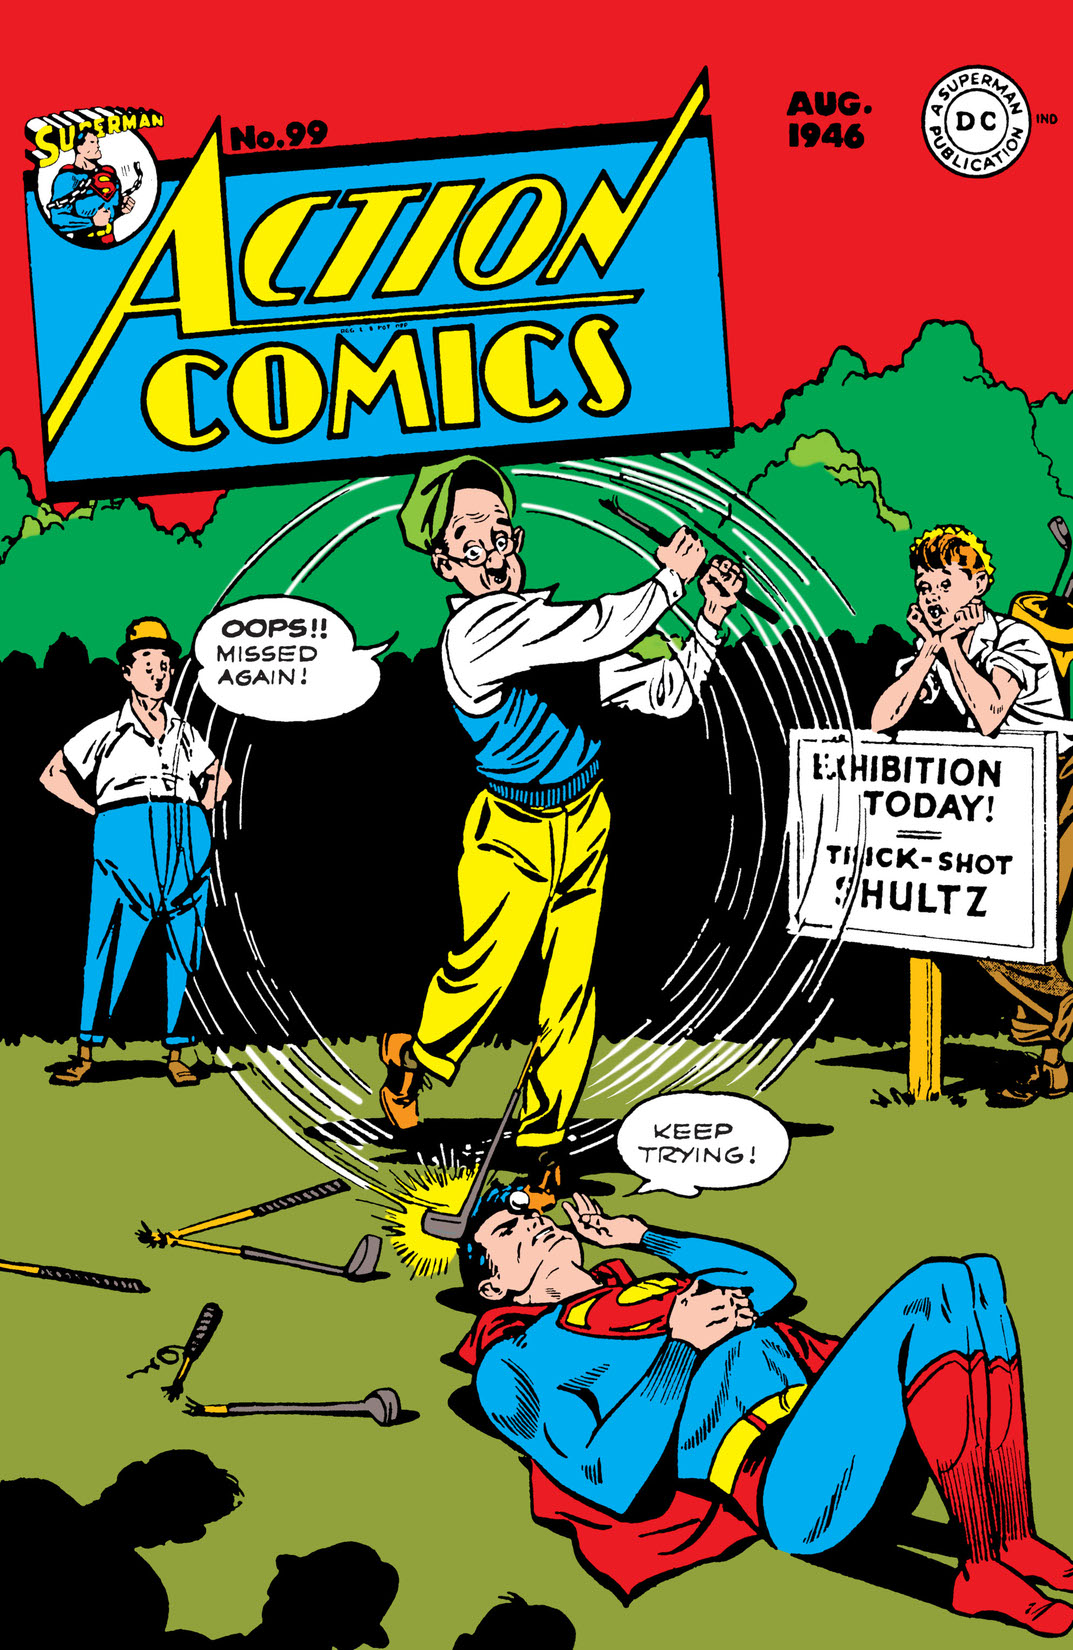 Action Comics (1938-) #99 preview images